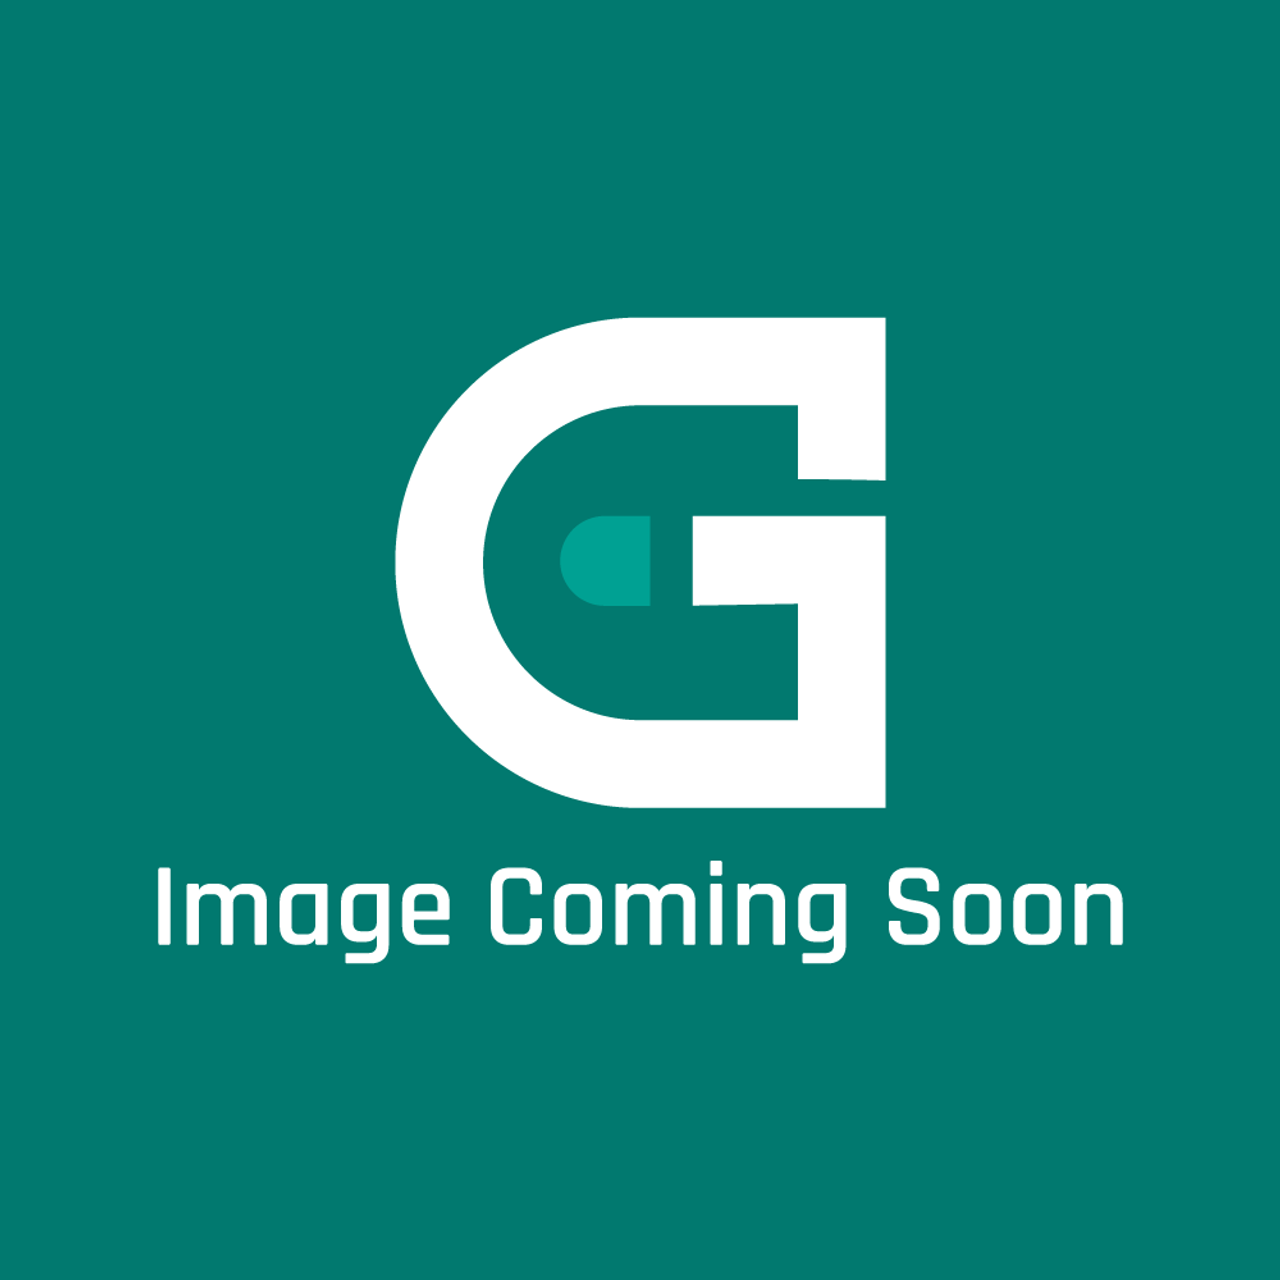 Roundup - AJ Antunes AJA7002316 - Cover,Sngl (W/ Egg Rack) - Image Coming Soon!